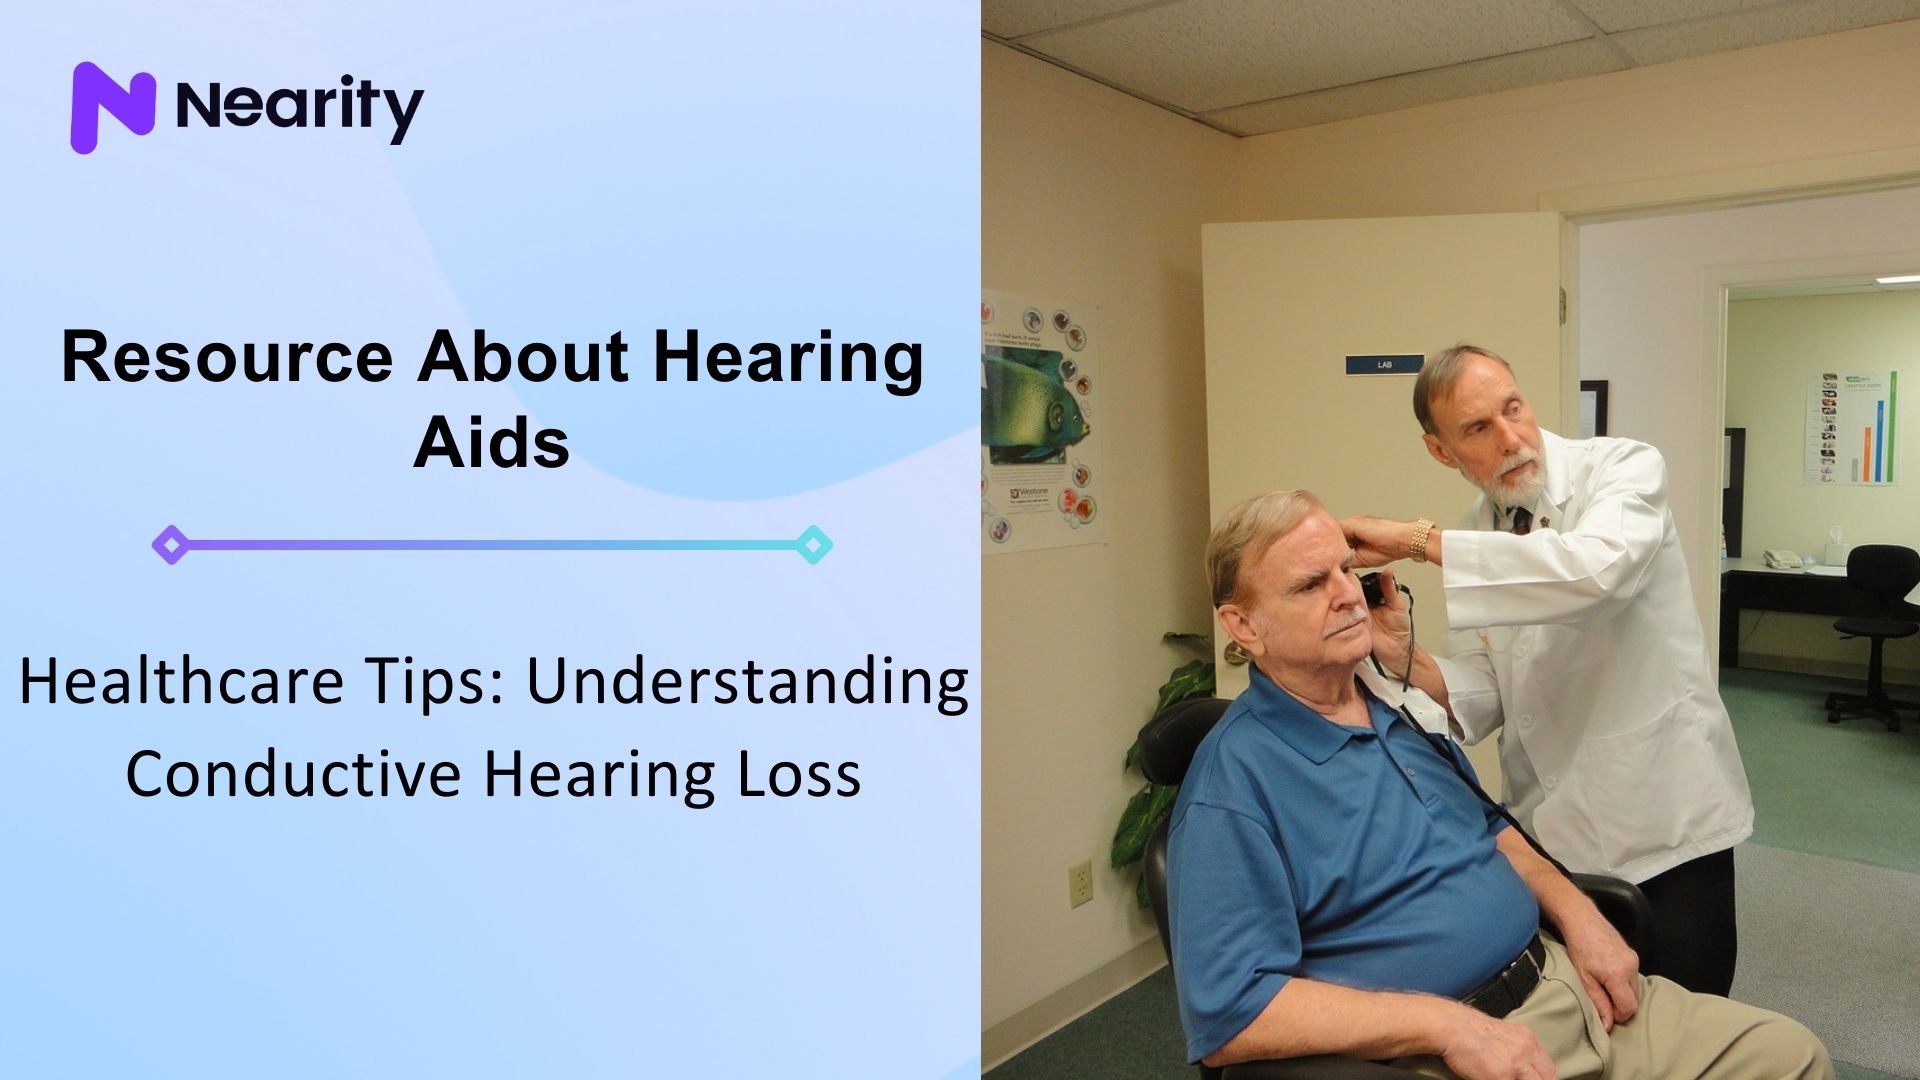 Healthcare Tips: Understanding Conductive Hearing Loss